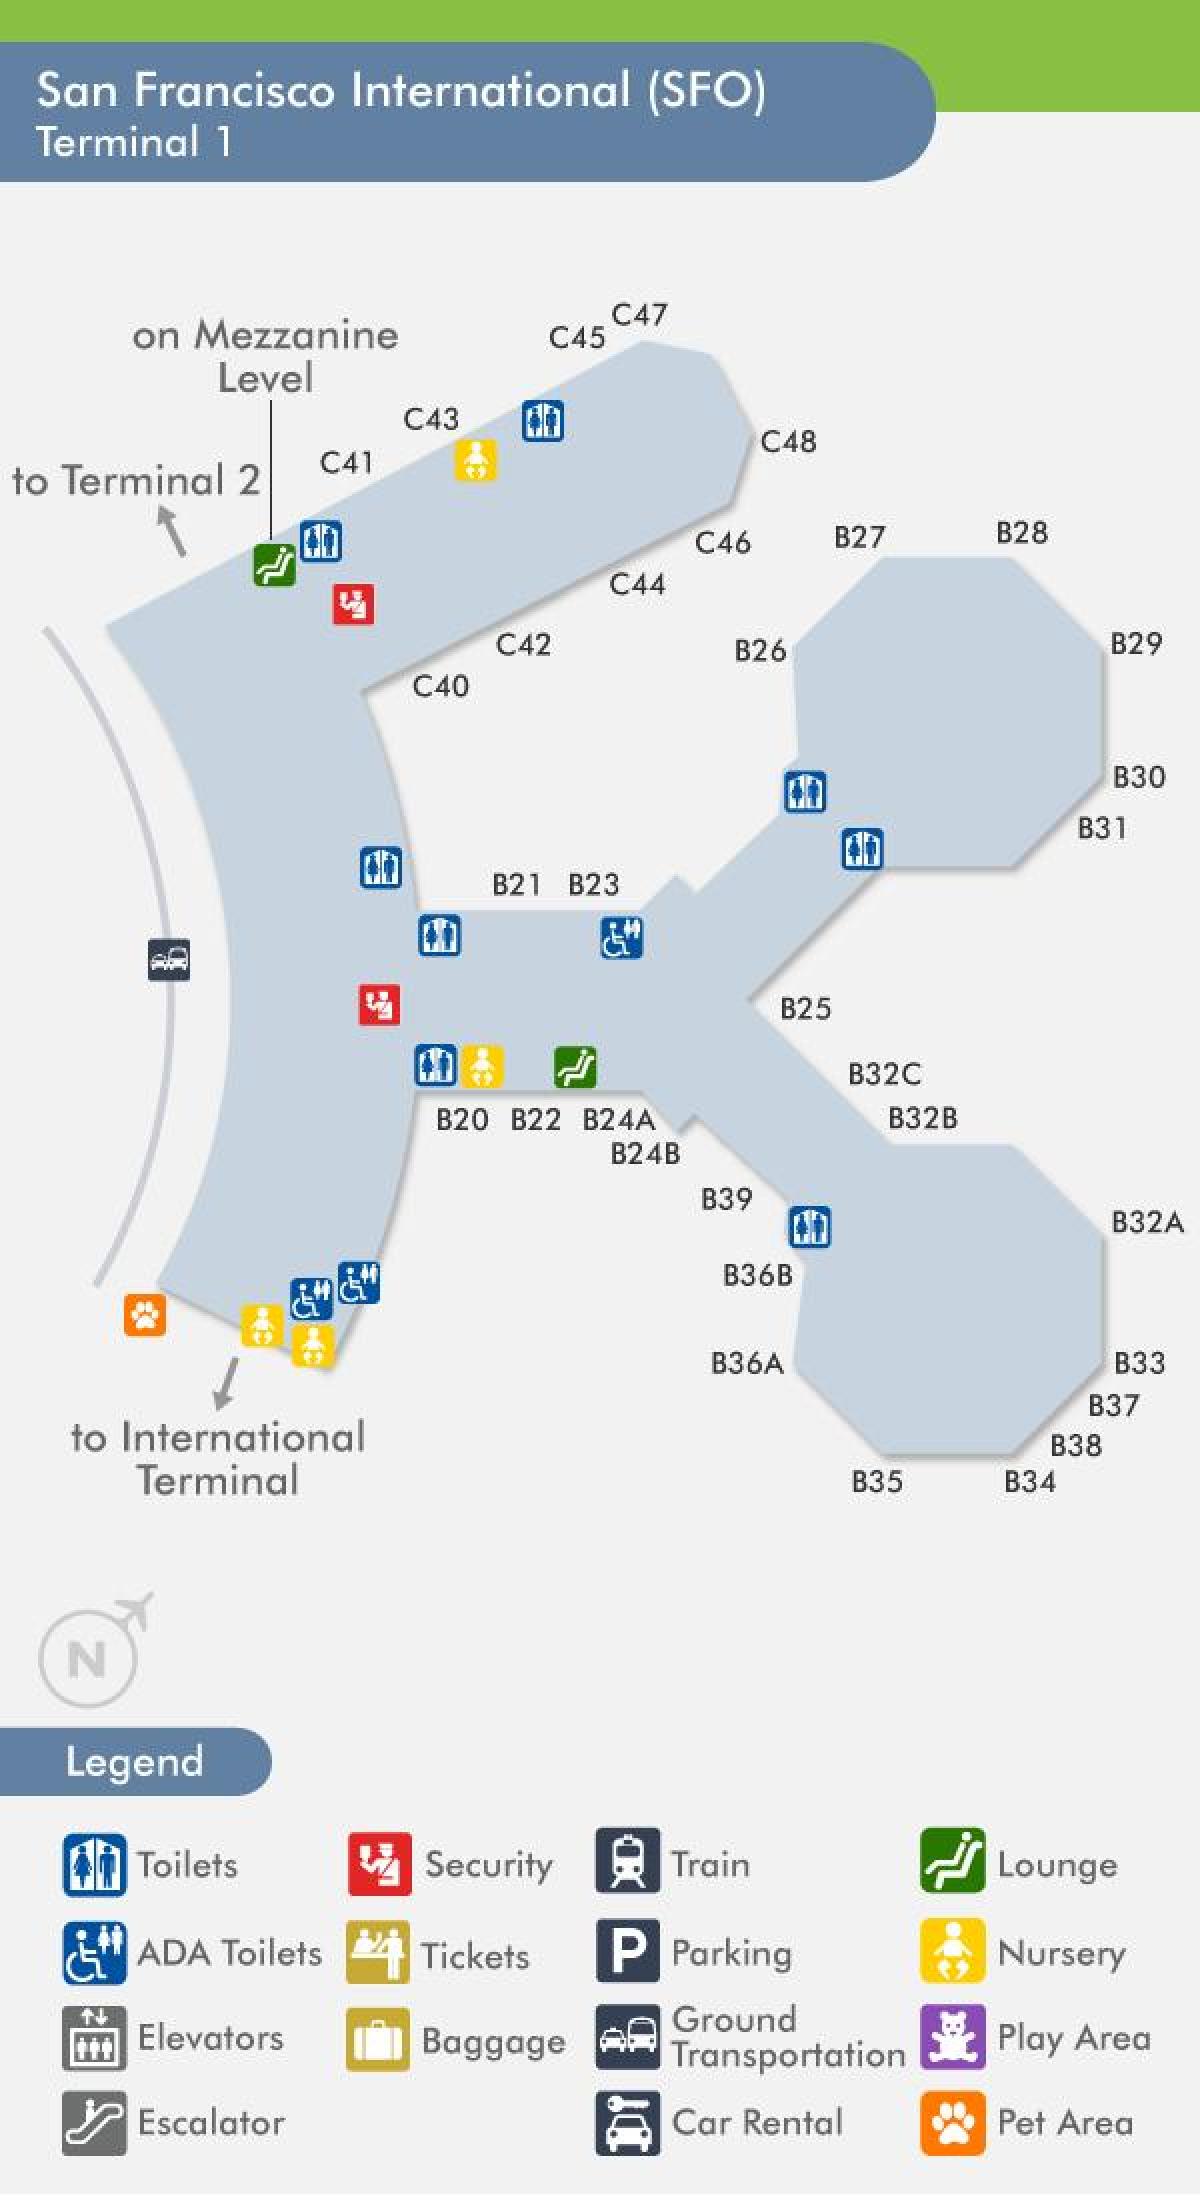 San Francisco airport terminal 1 på karta